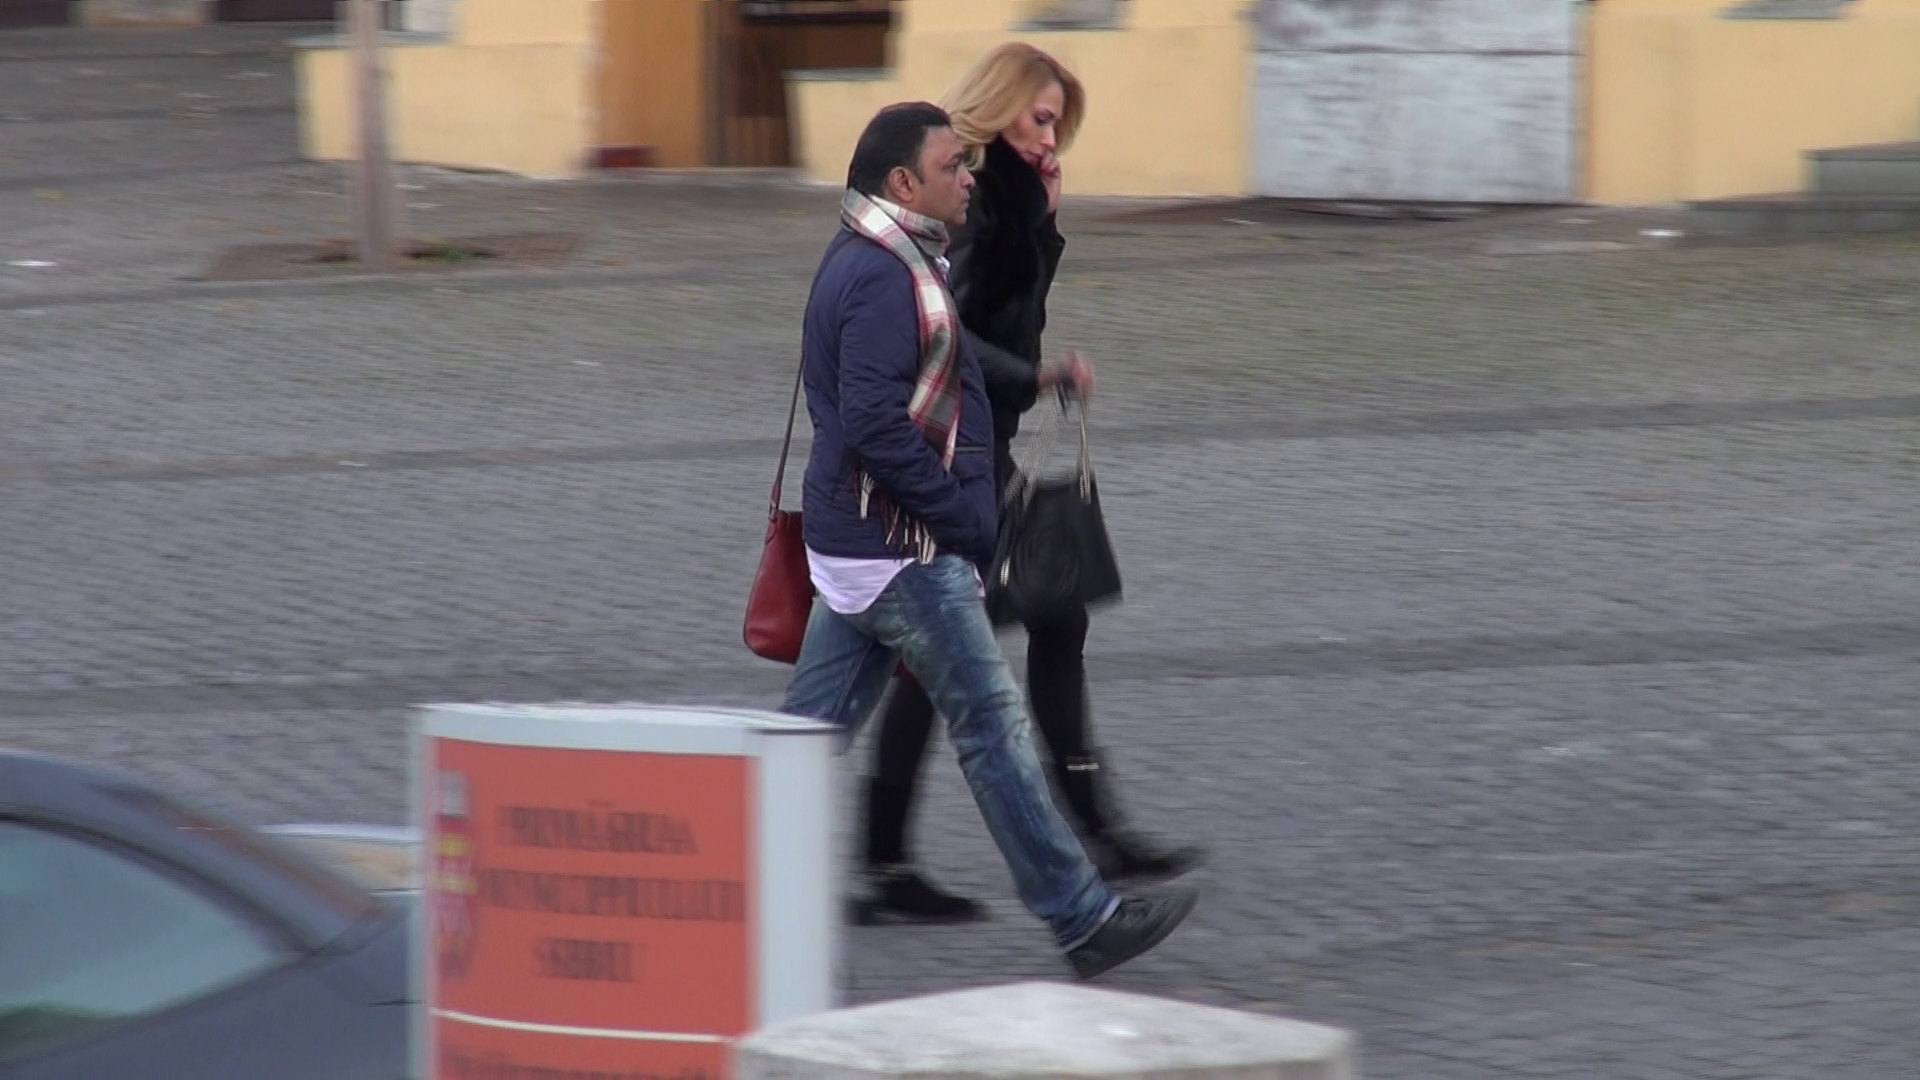 Dupa ce am mancat, Iulia si amicul ei au iesit sa se plimbe prin centrul Sibiului